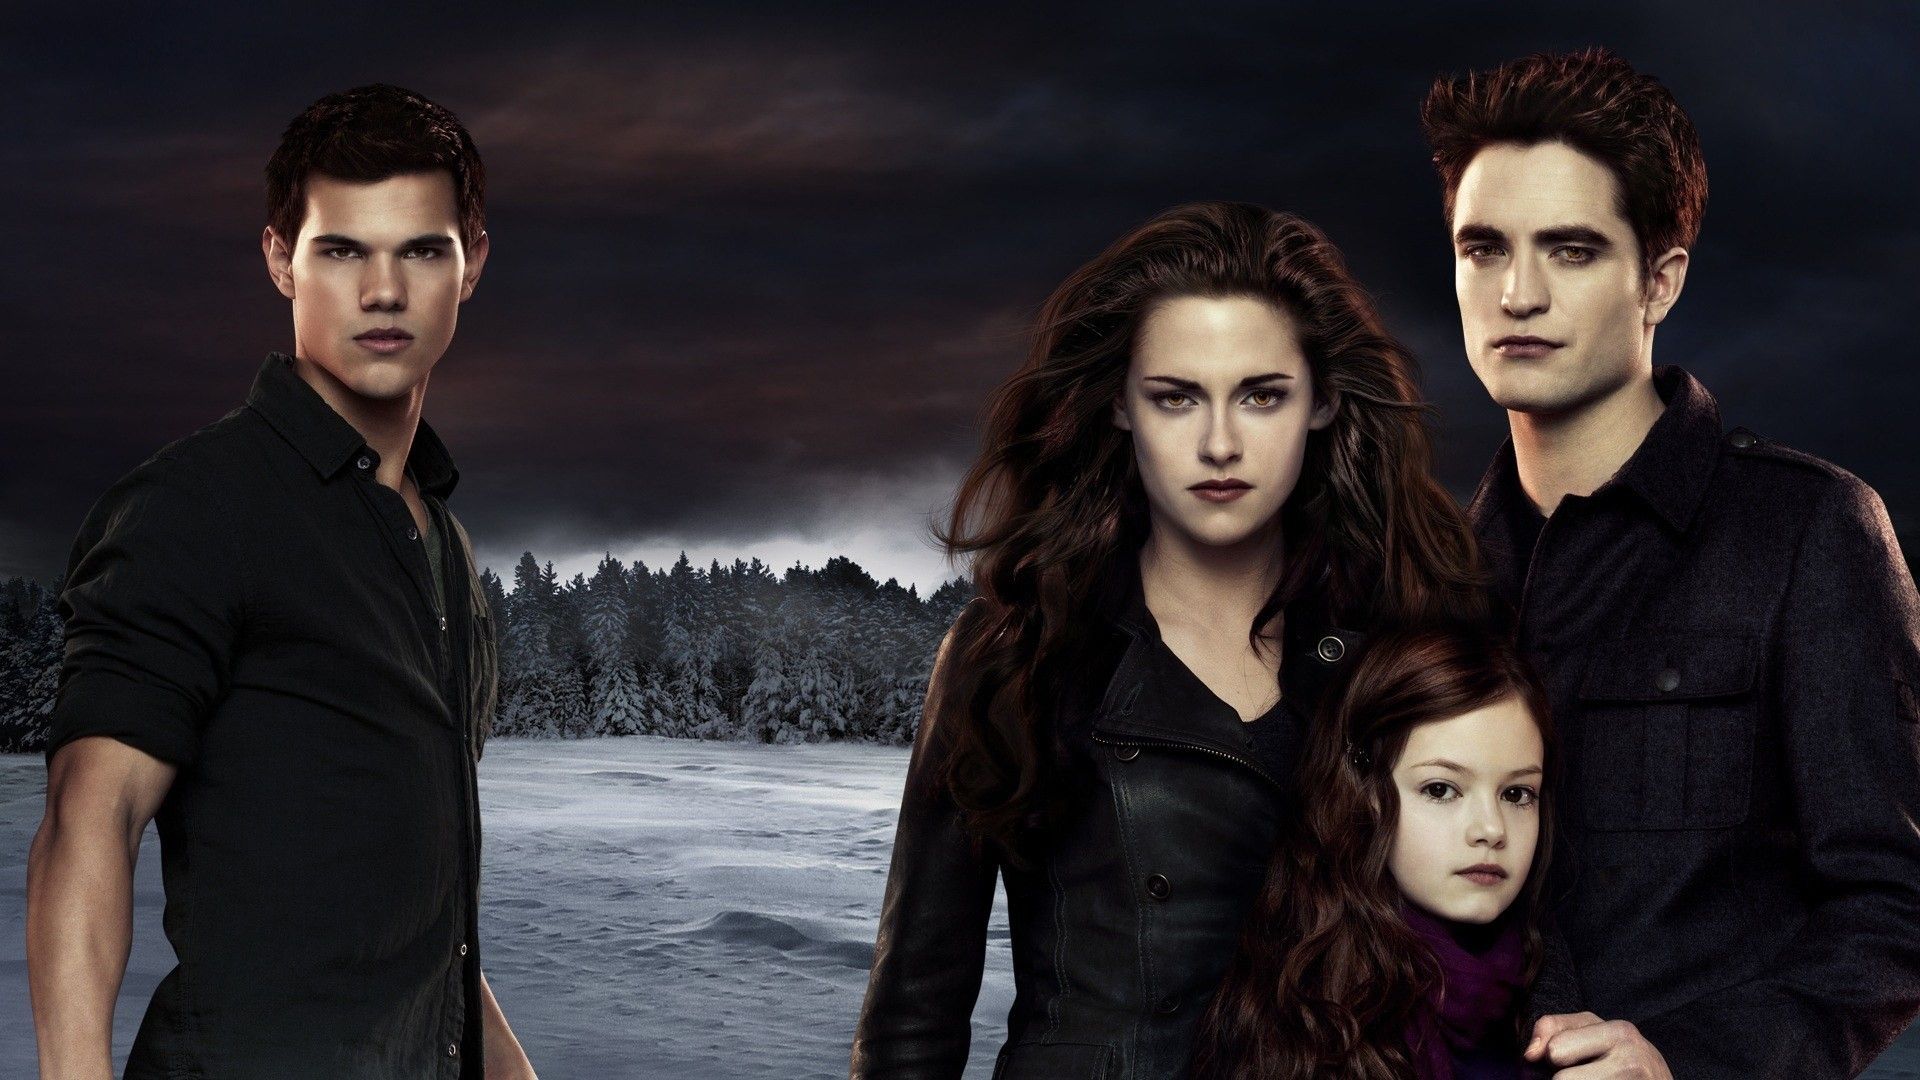 In The Final Installment Of The Twilight Saga, Bella Edward Jacob Renesmee